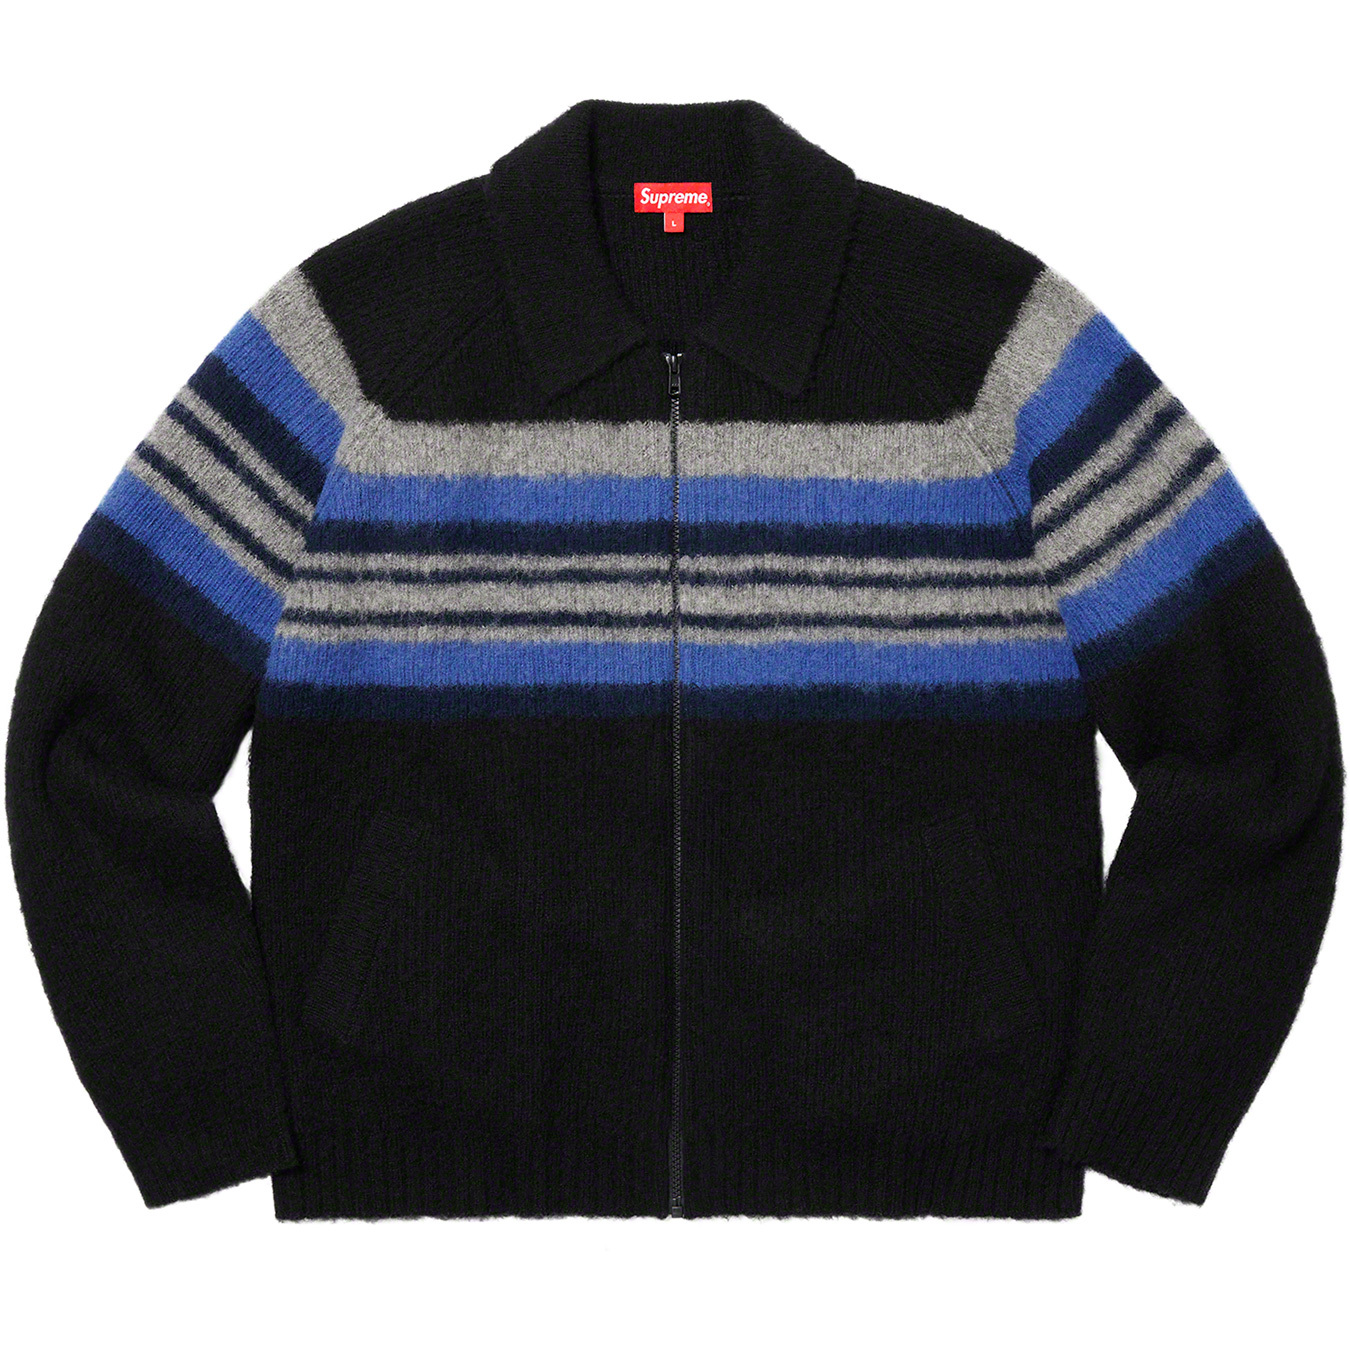 Brushed Wool Zip Up Sweater - fall winter 2019 - Supreme